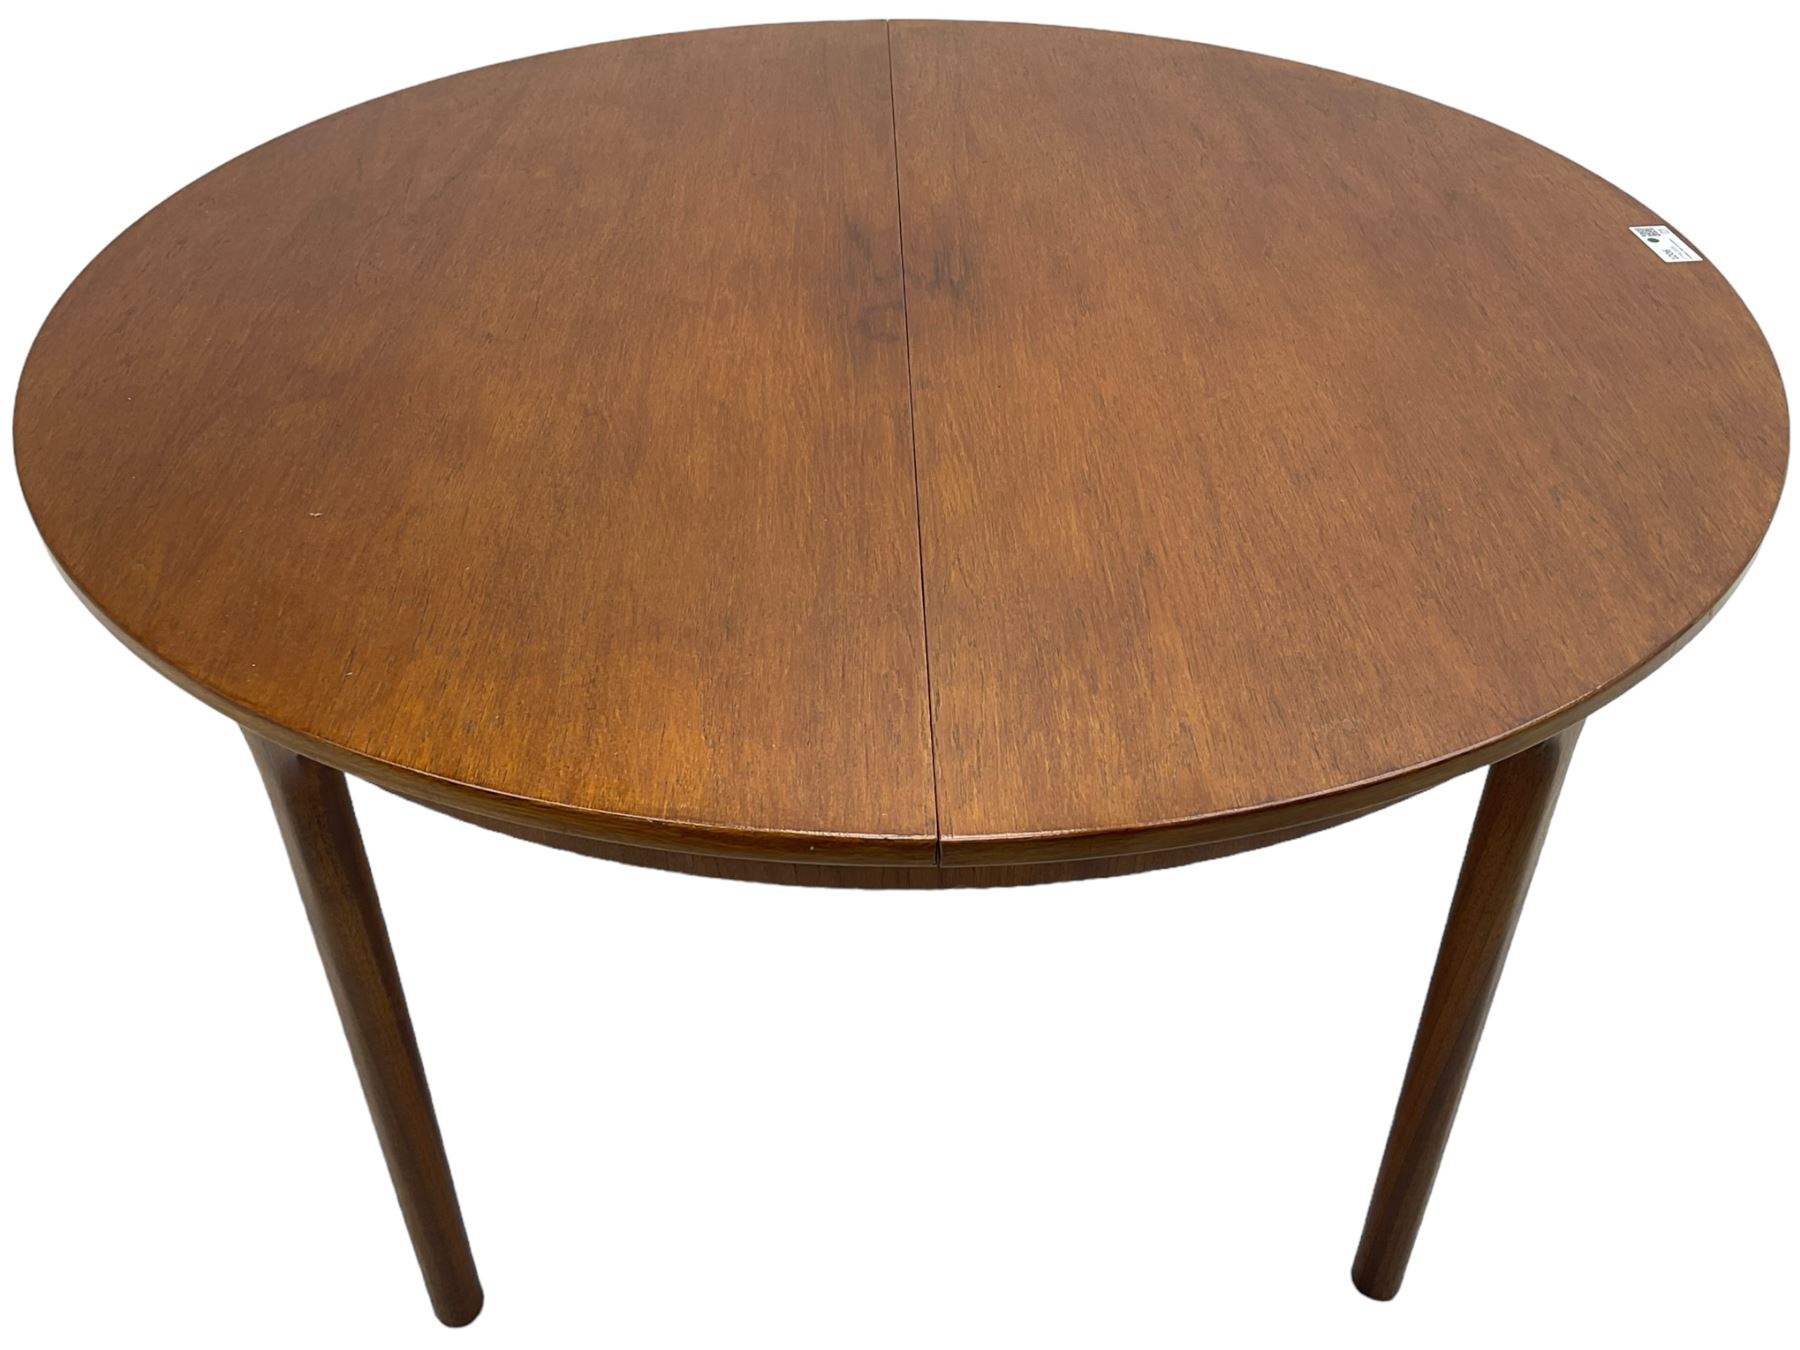 McIntosh - mid-20th century teak extending dining table - Image 5 of 7